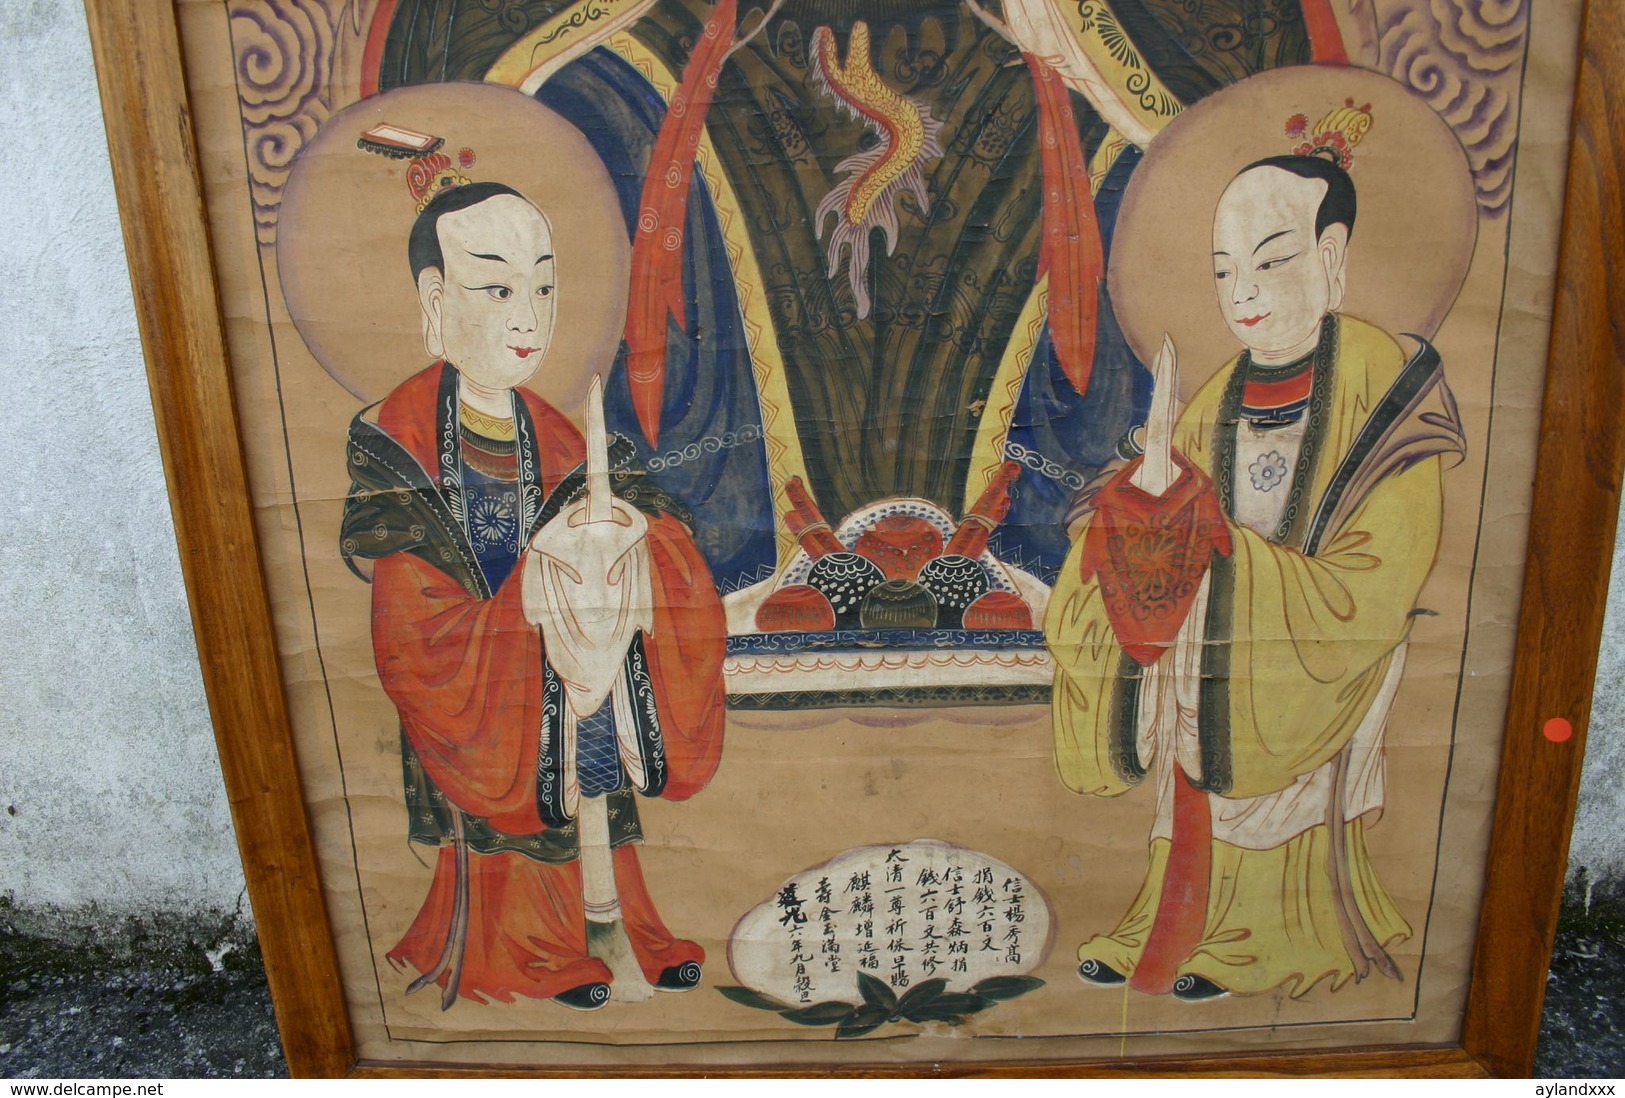 CINA (China): Pair of ancient Chinese Taoist paintings